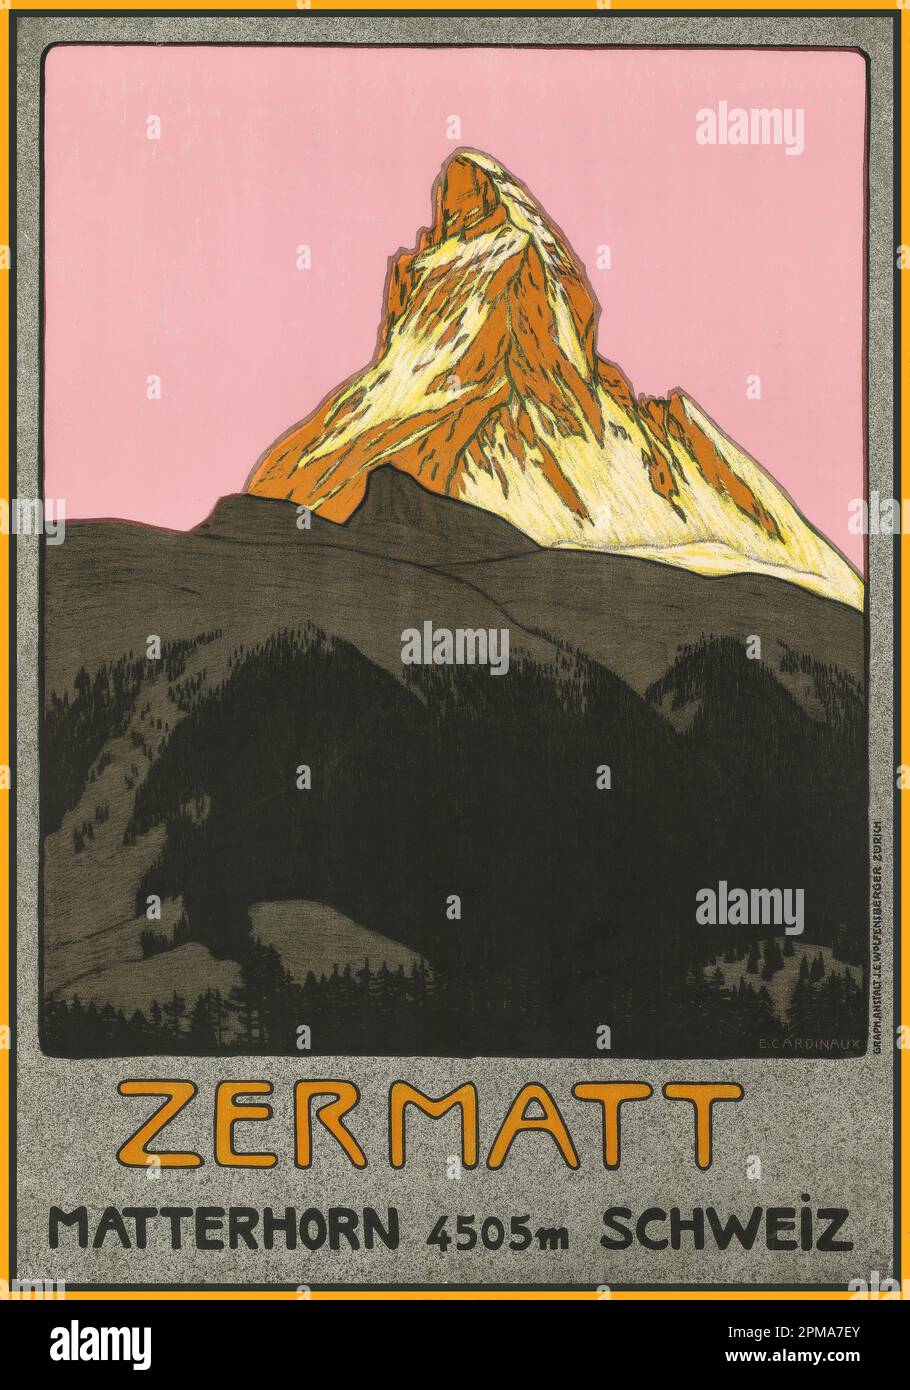 MATTERHORN ZERMATT Vintage 1900s Travel Poster Zermatt, Matterhorn 4505m Schweiz Switzerland by Emil Cardinaux  (1877–1936)  1908 Abstract Lithograph Illustration Stock Photo